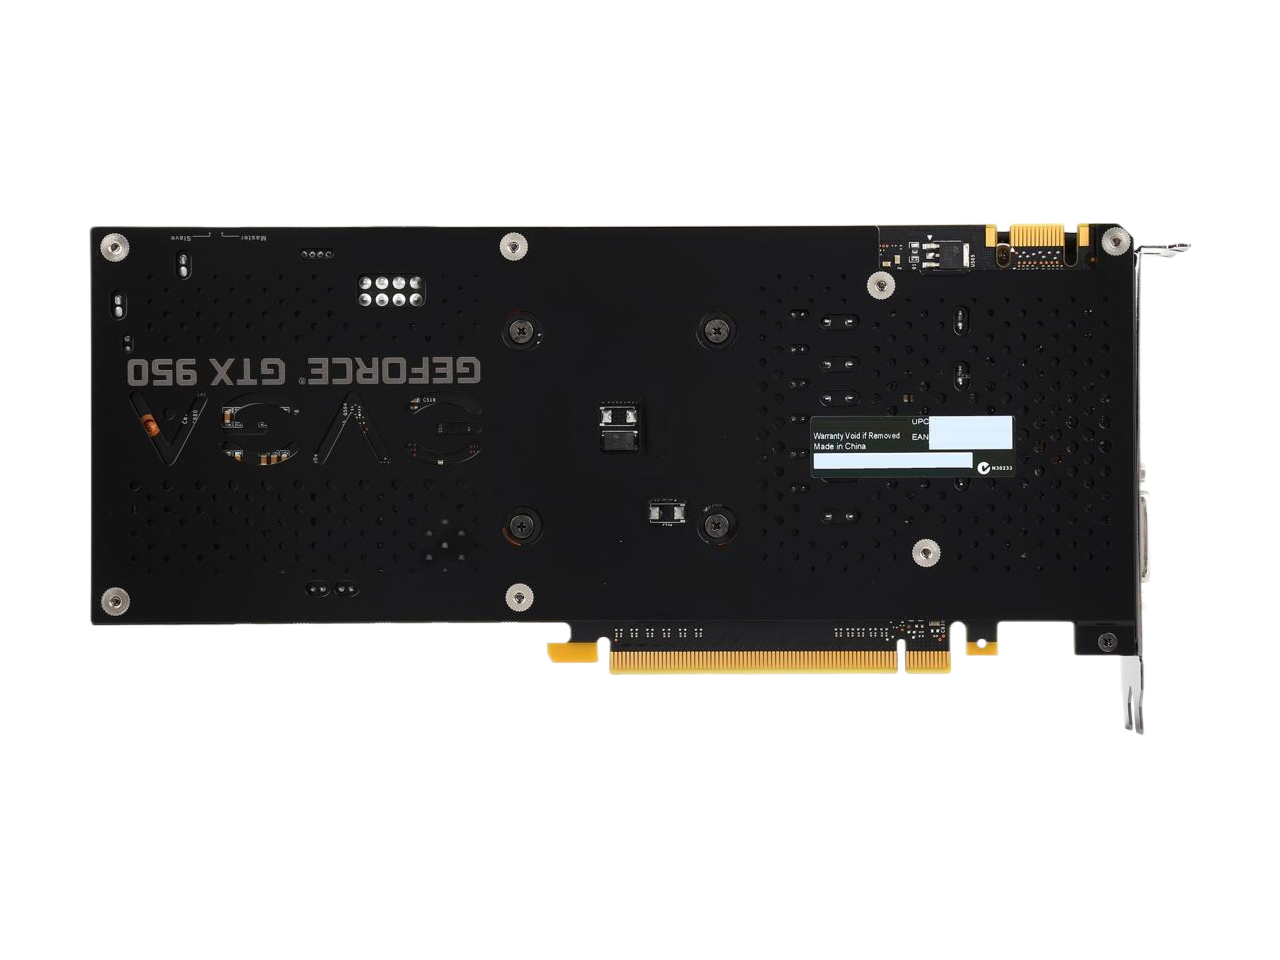 EVGA GeForce GTX 950 2GB GDDR5 PCI Express 3.0 x16 SLI Support Video Card 02G-P4-1953-KR